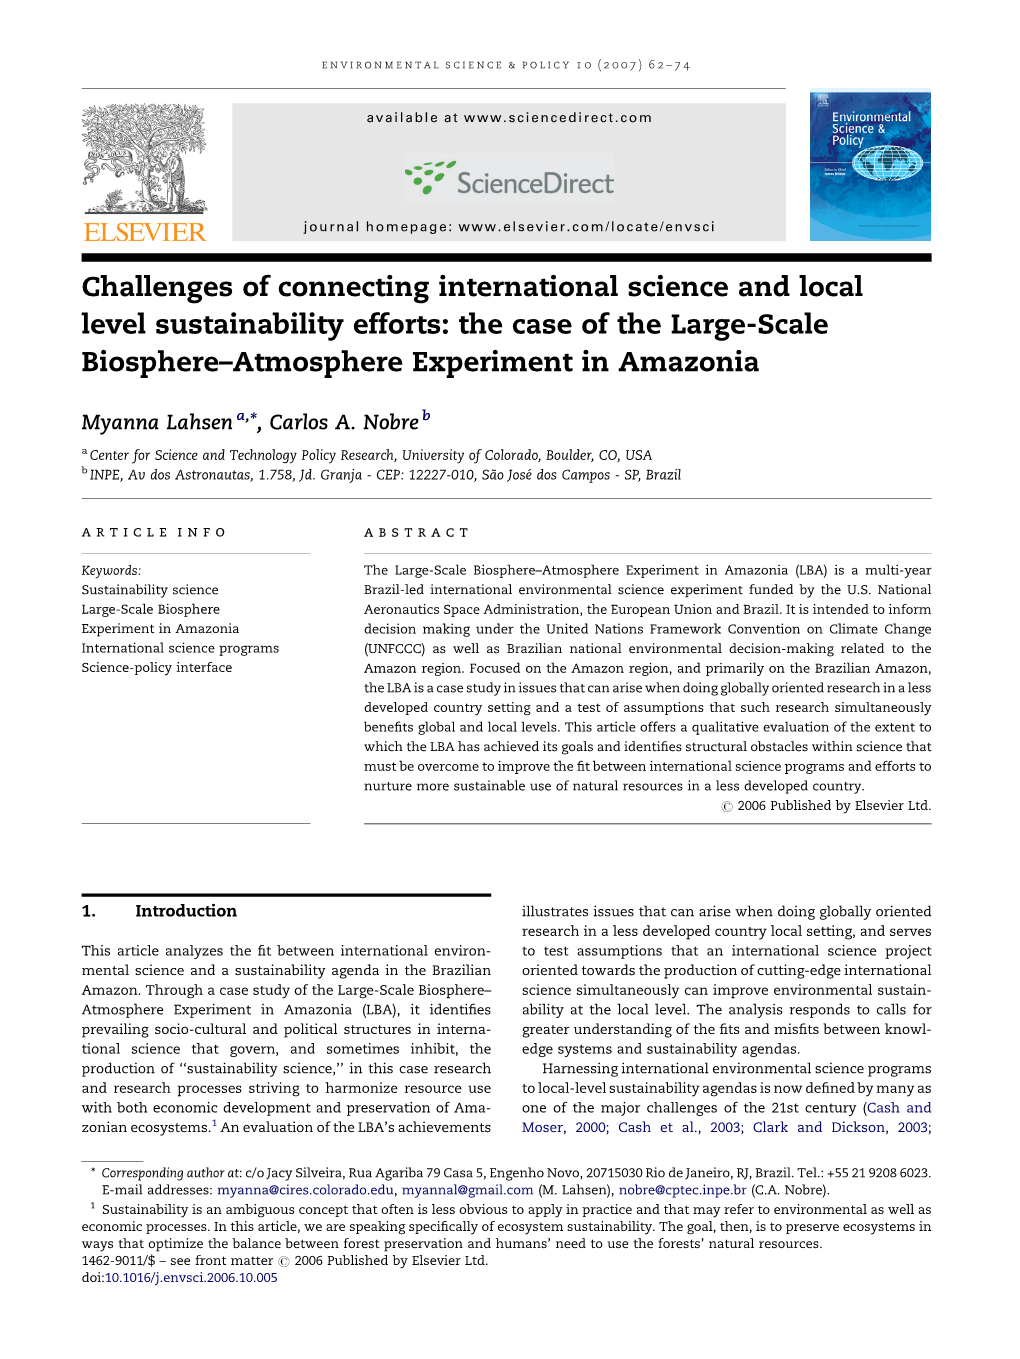 Atmosphere Experiment in Amazonia